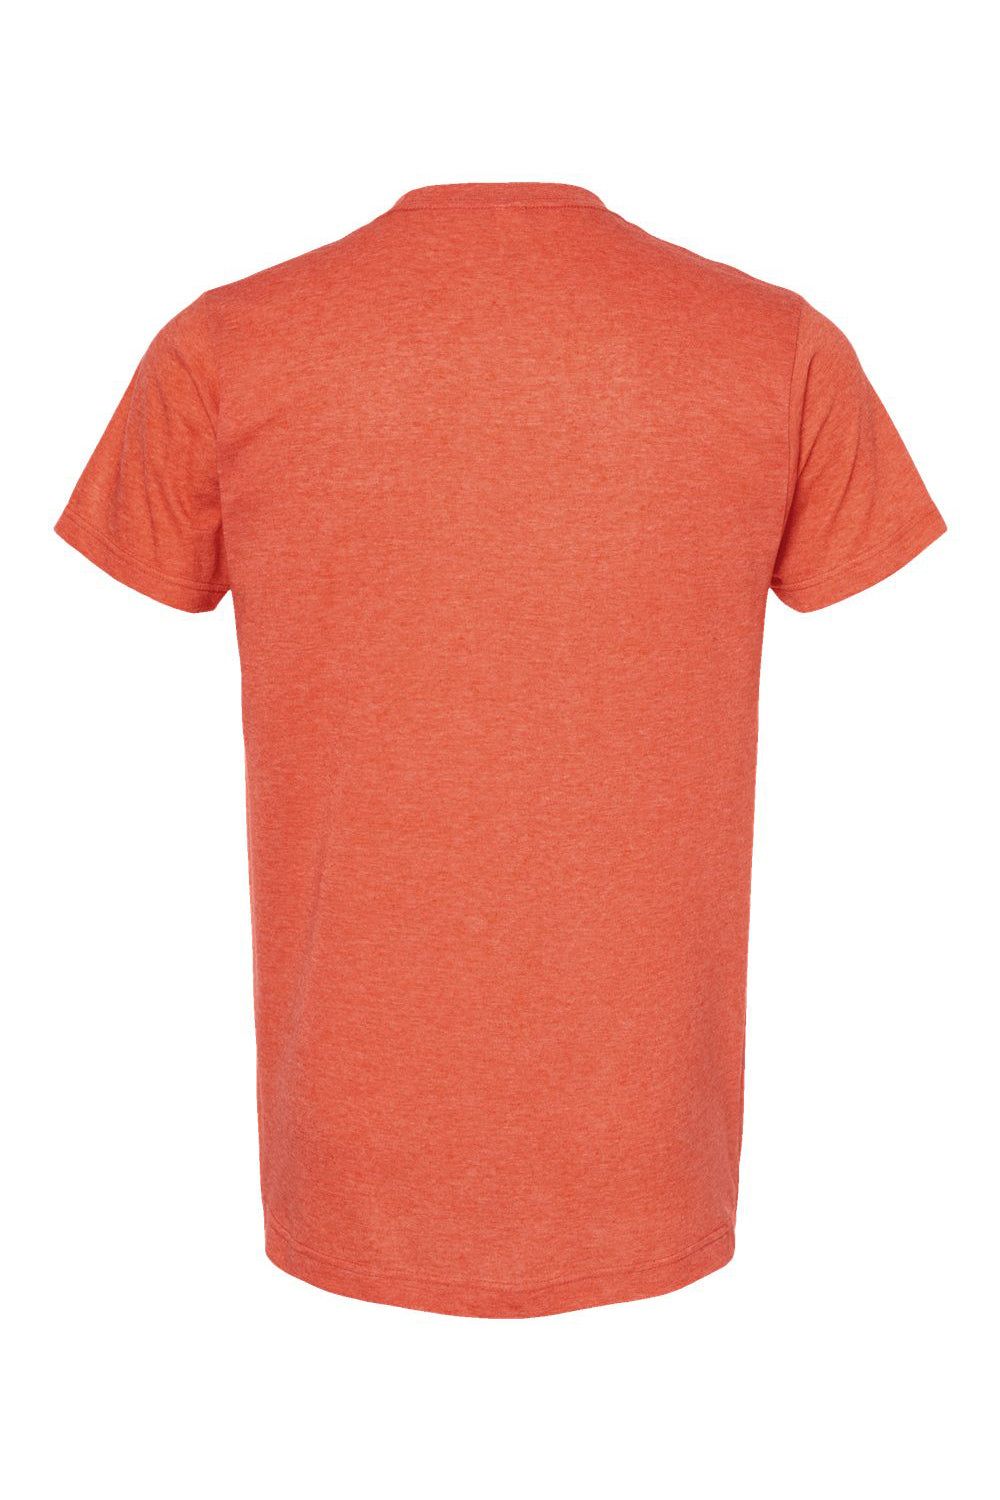 Tultex 241 Mens Poly-Rich Short Sleeve Crewneck T-Shirt Heather Orange Flat Back